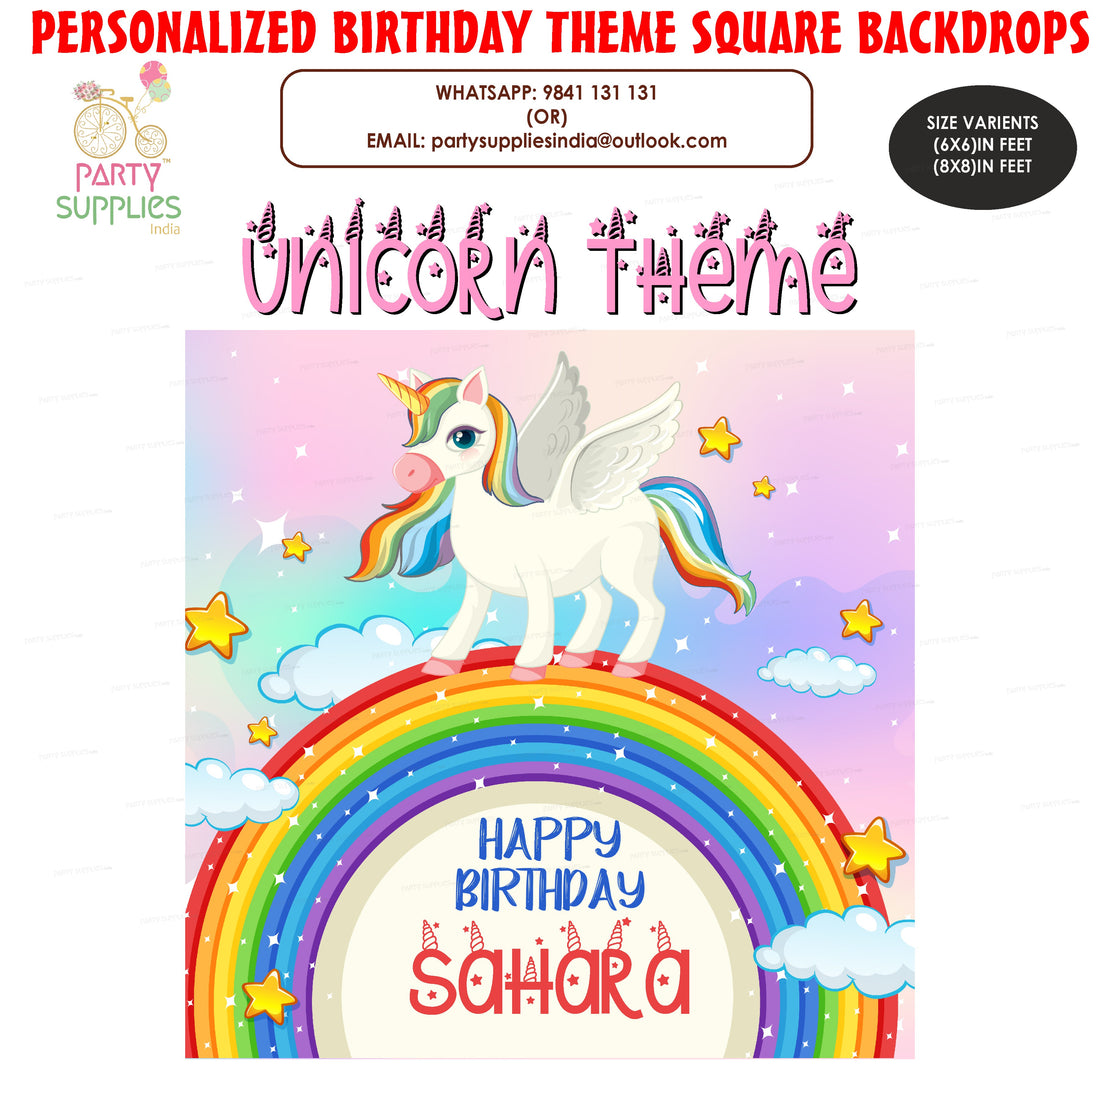 Unicorn Theme Customized Square Backdrop